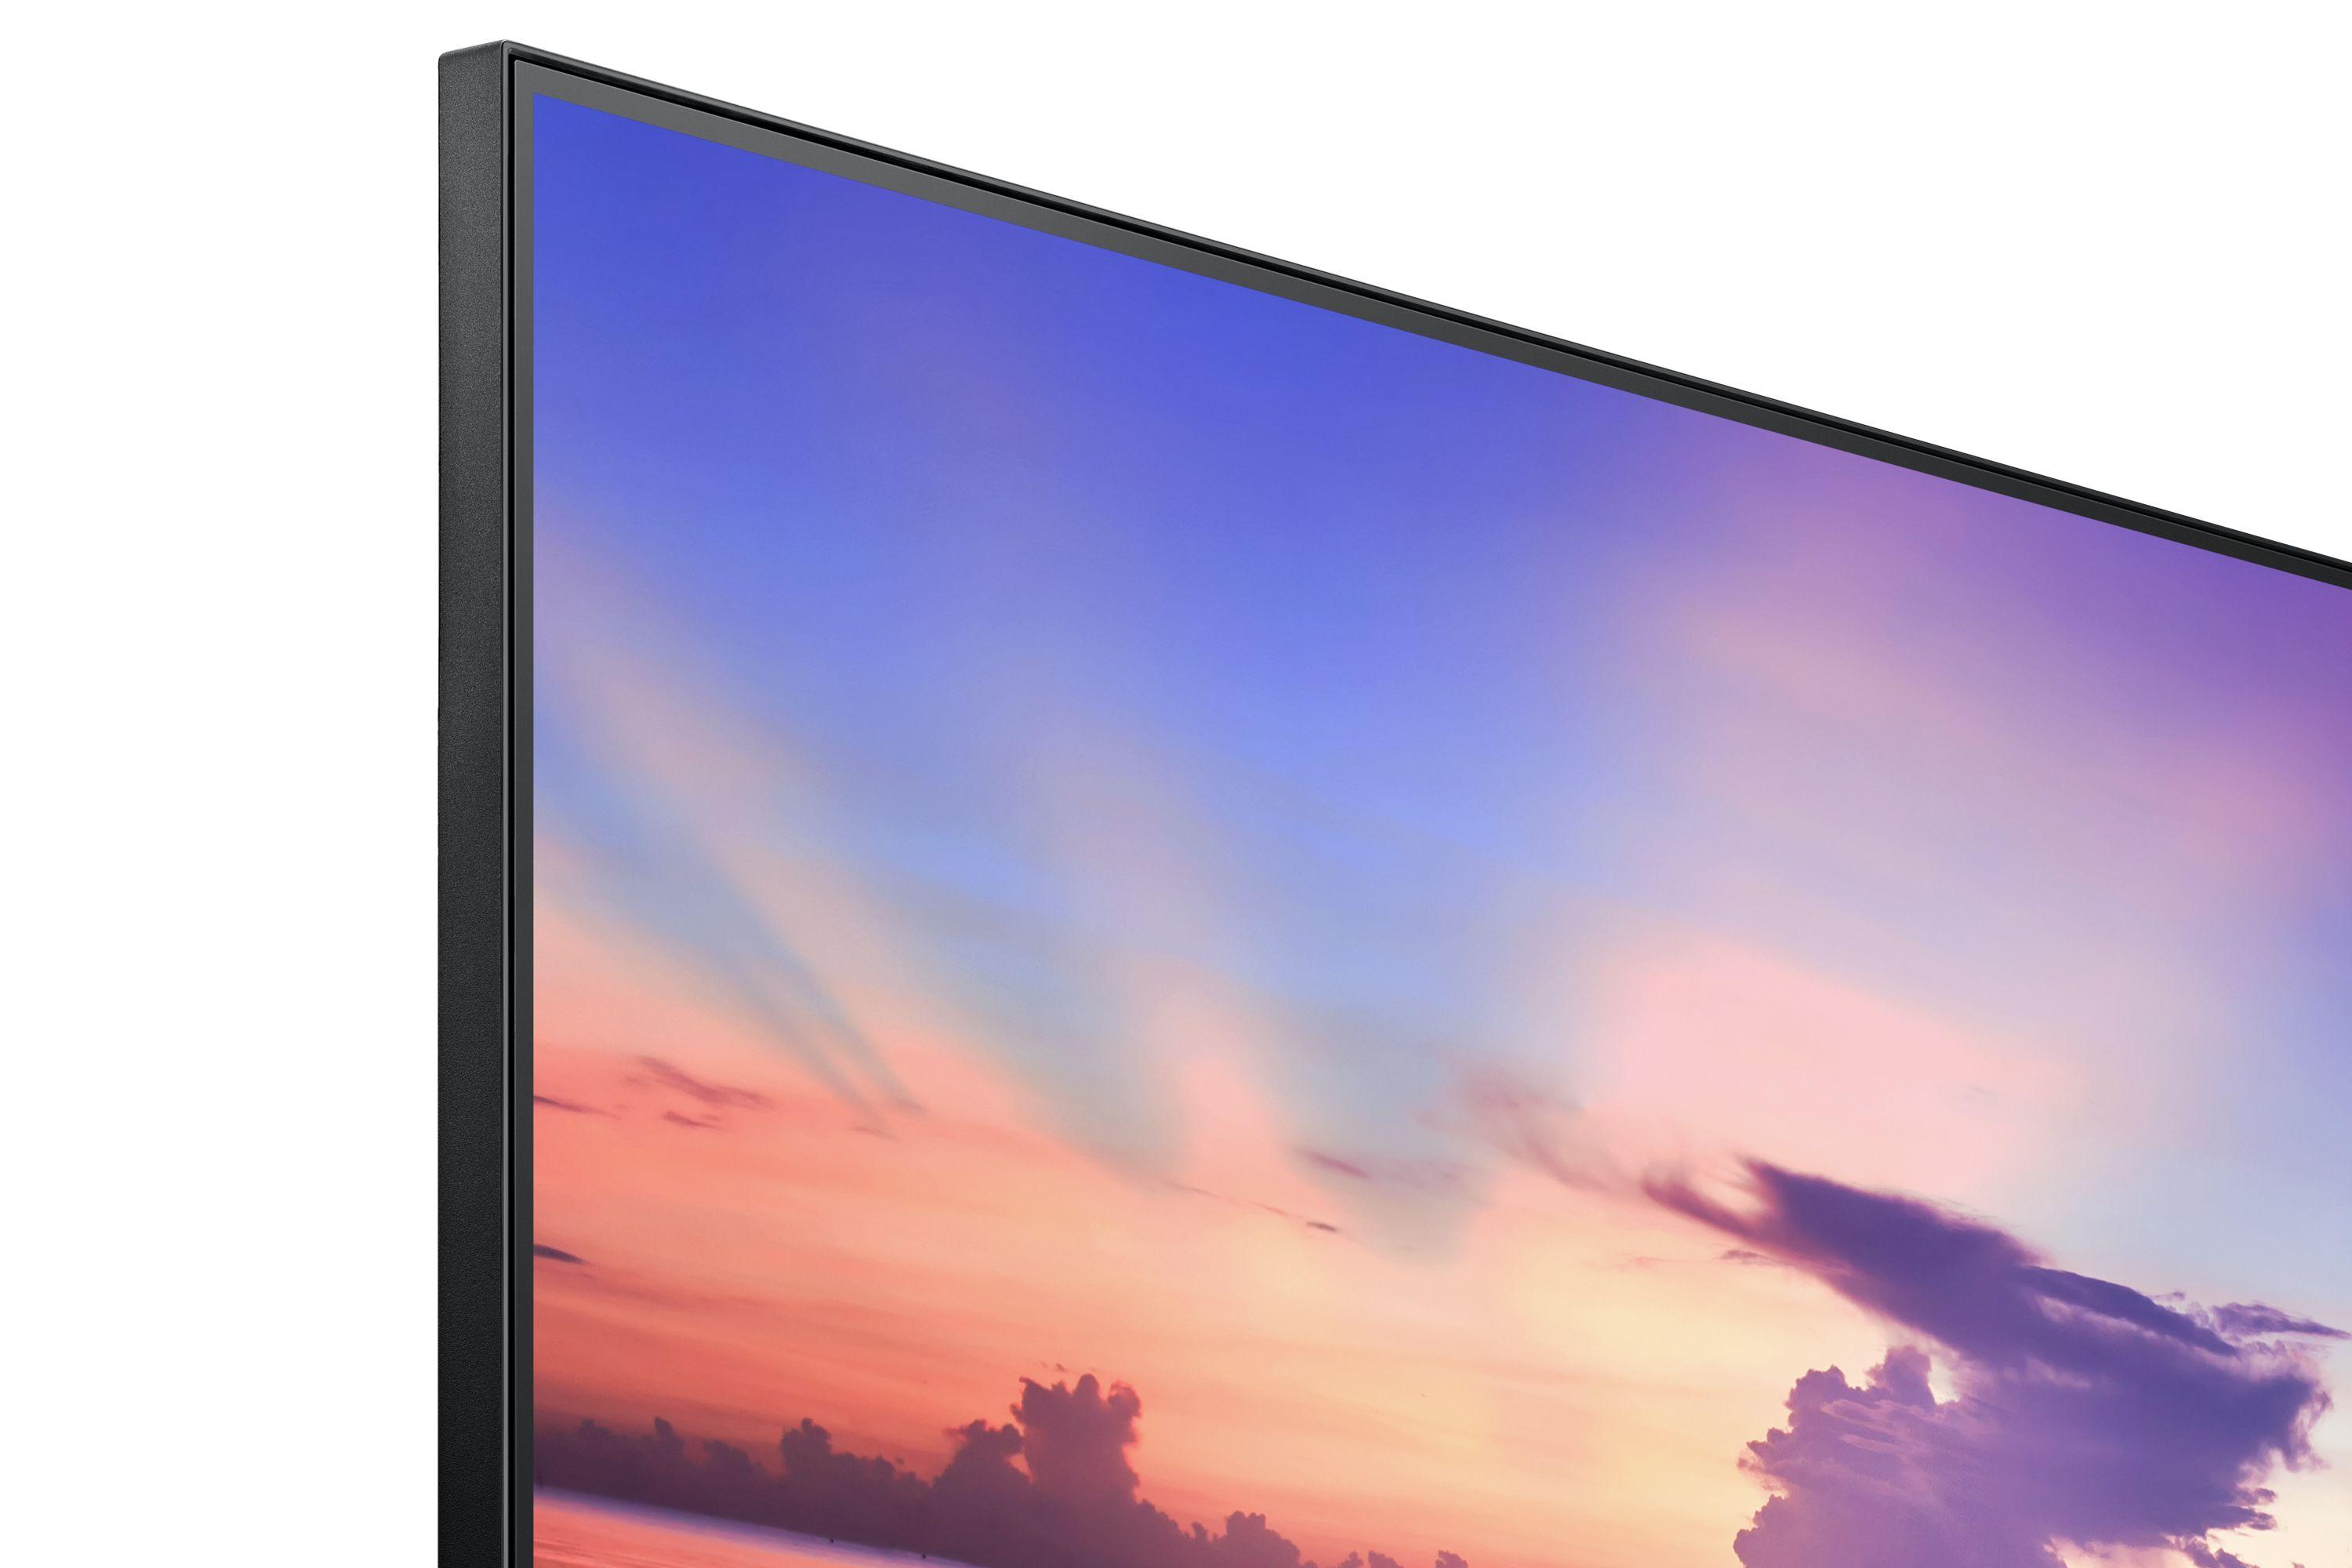 Samsung F27T350FHR 68.6 cm (27") 1920 x 1080 pixels Full HD LED Black